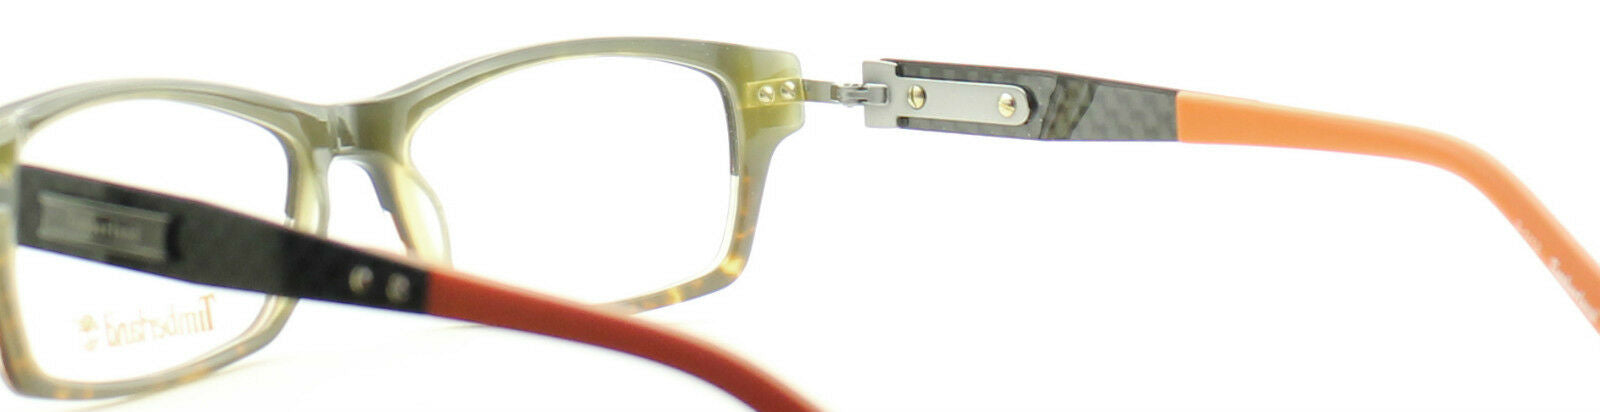 TIMBERLAND TB1251 col.056 Eyewear FRAMES Glasses RX Optical Eyeglasses - TRUSTED